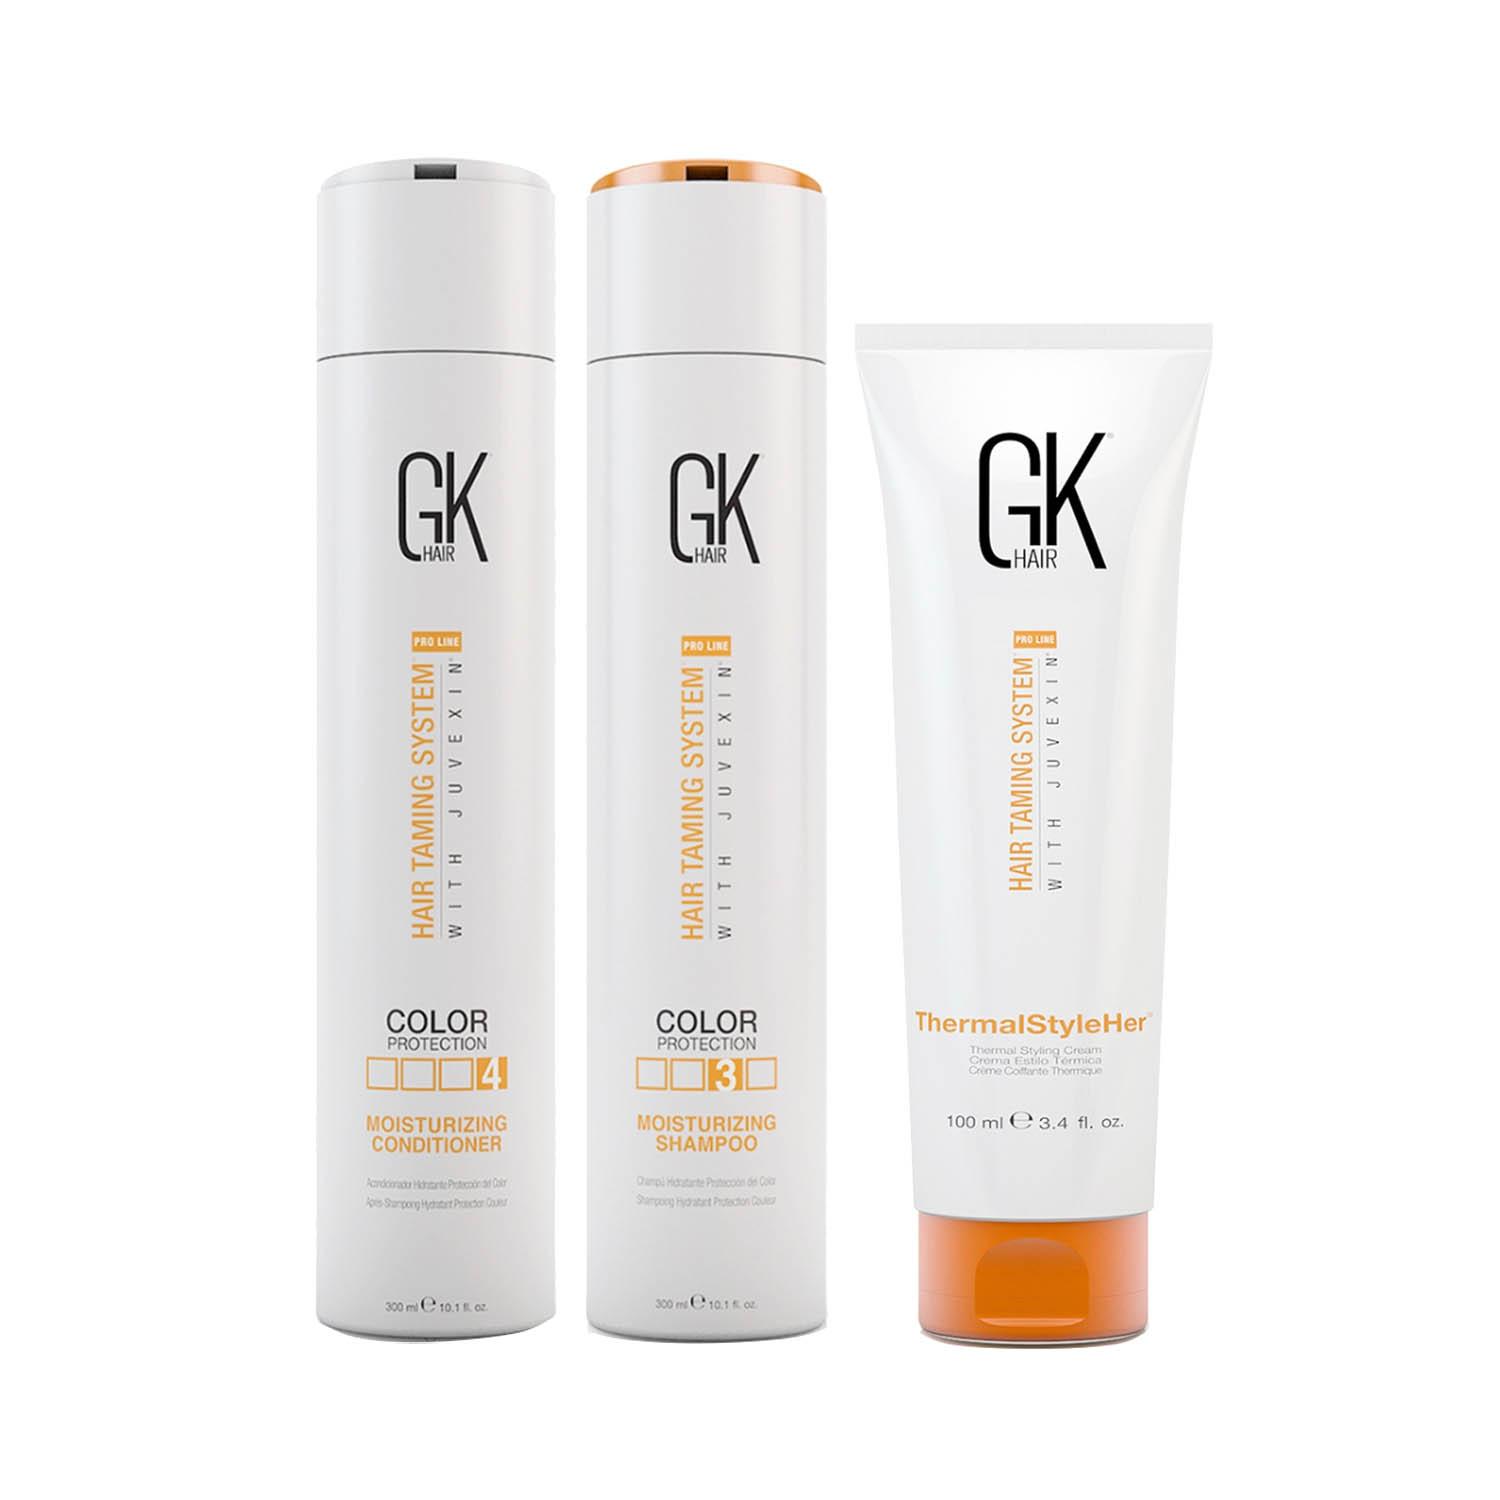 GK Hair | GK Hair Moisturizing Shampoo and Conditioner 300ml with Thermal Styleher Cream 100ml